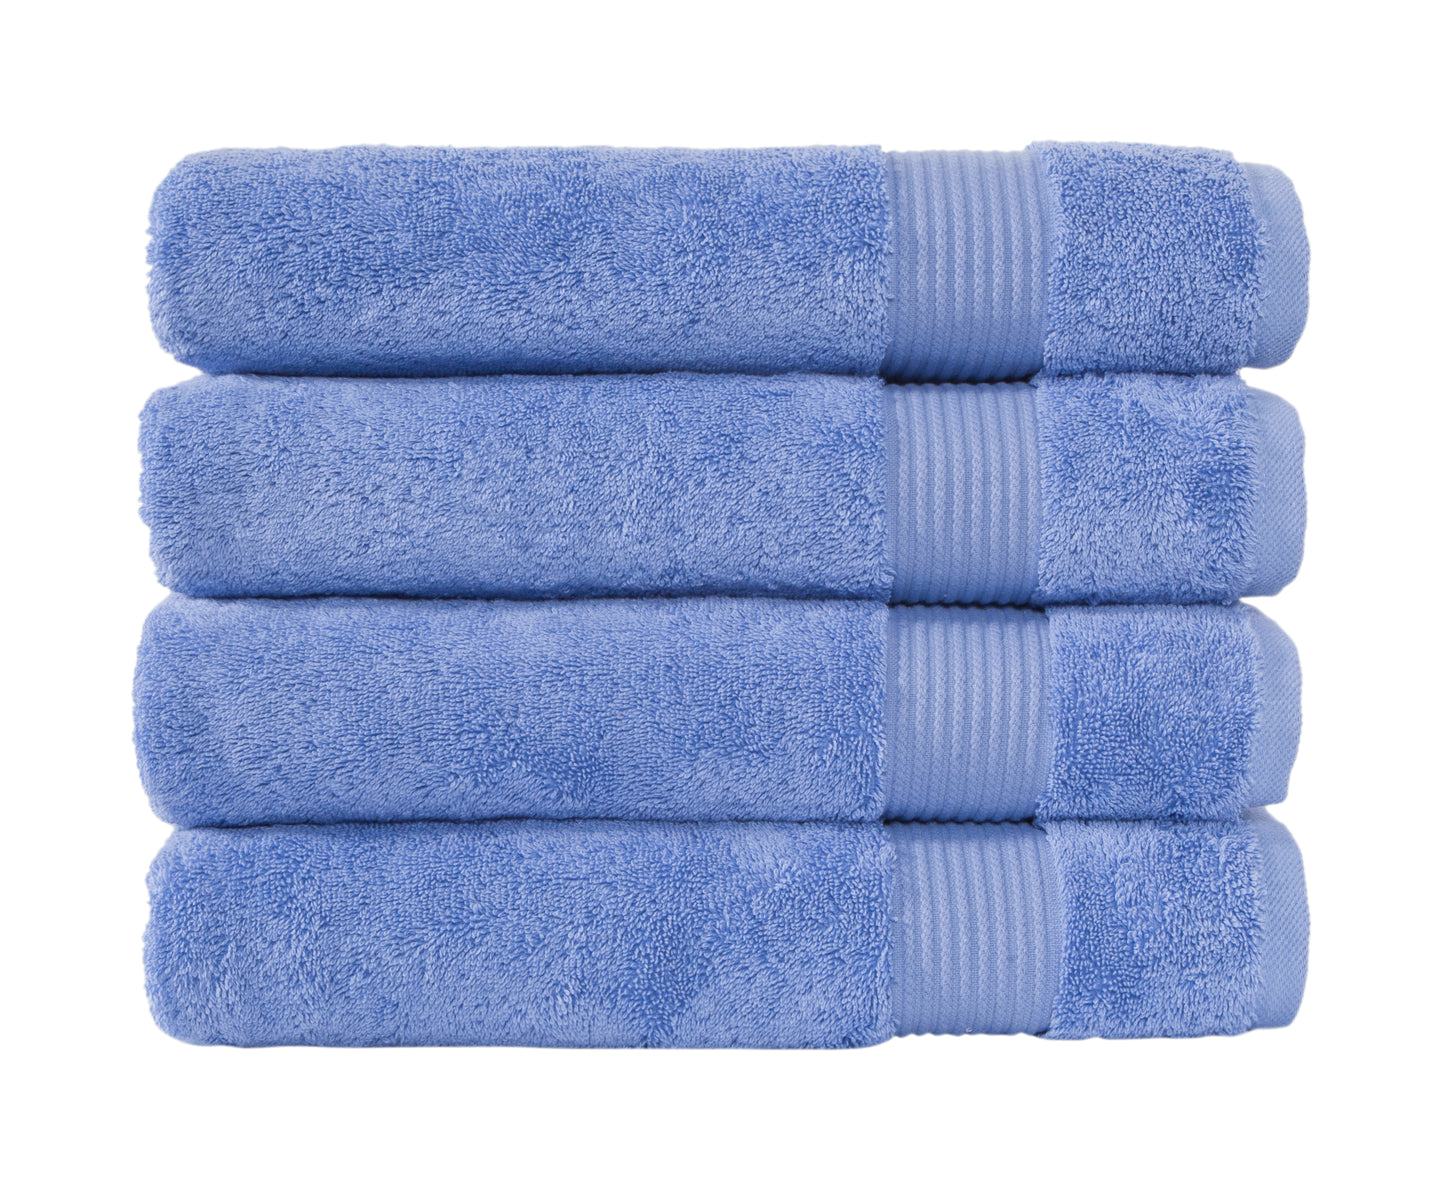 Hotel Style Turkish Cotton Bath Towel Collection, Bath Sheet, Light Blue -  1 Piece 